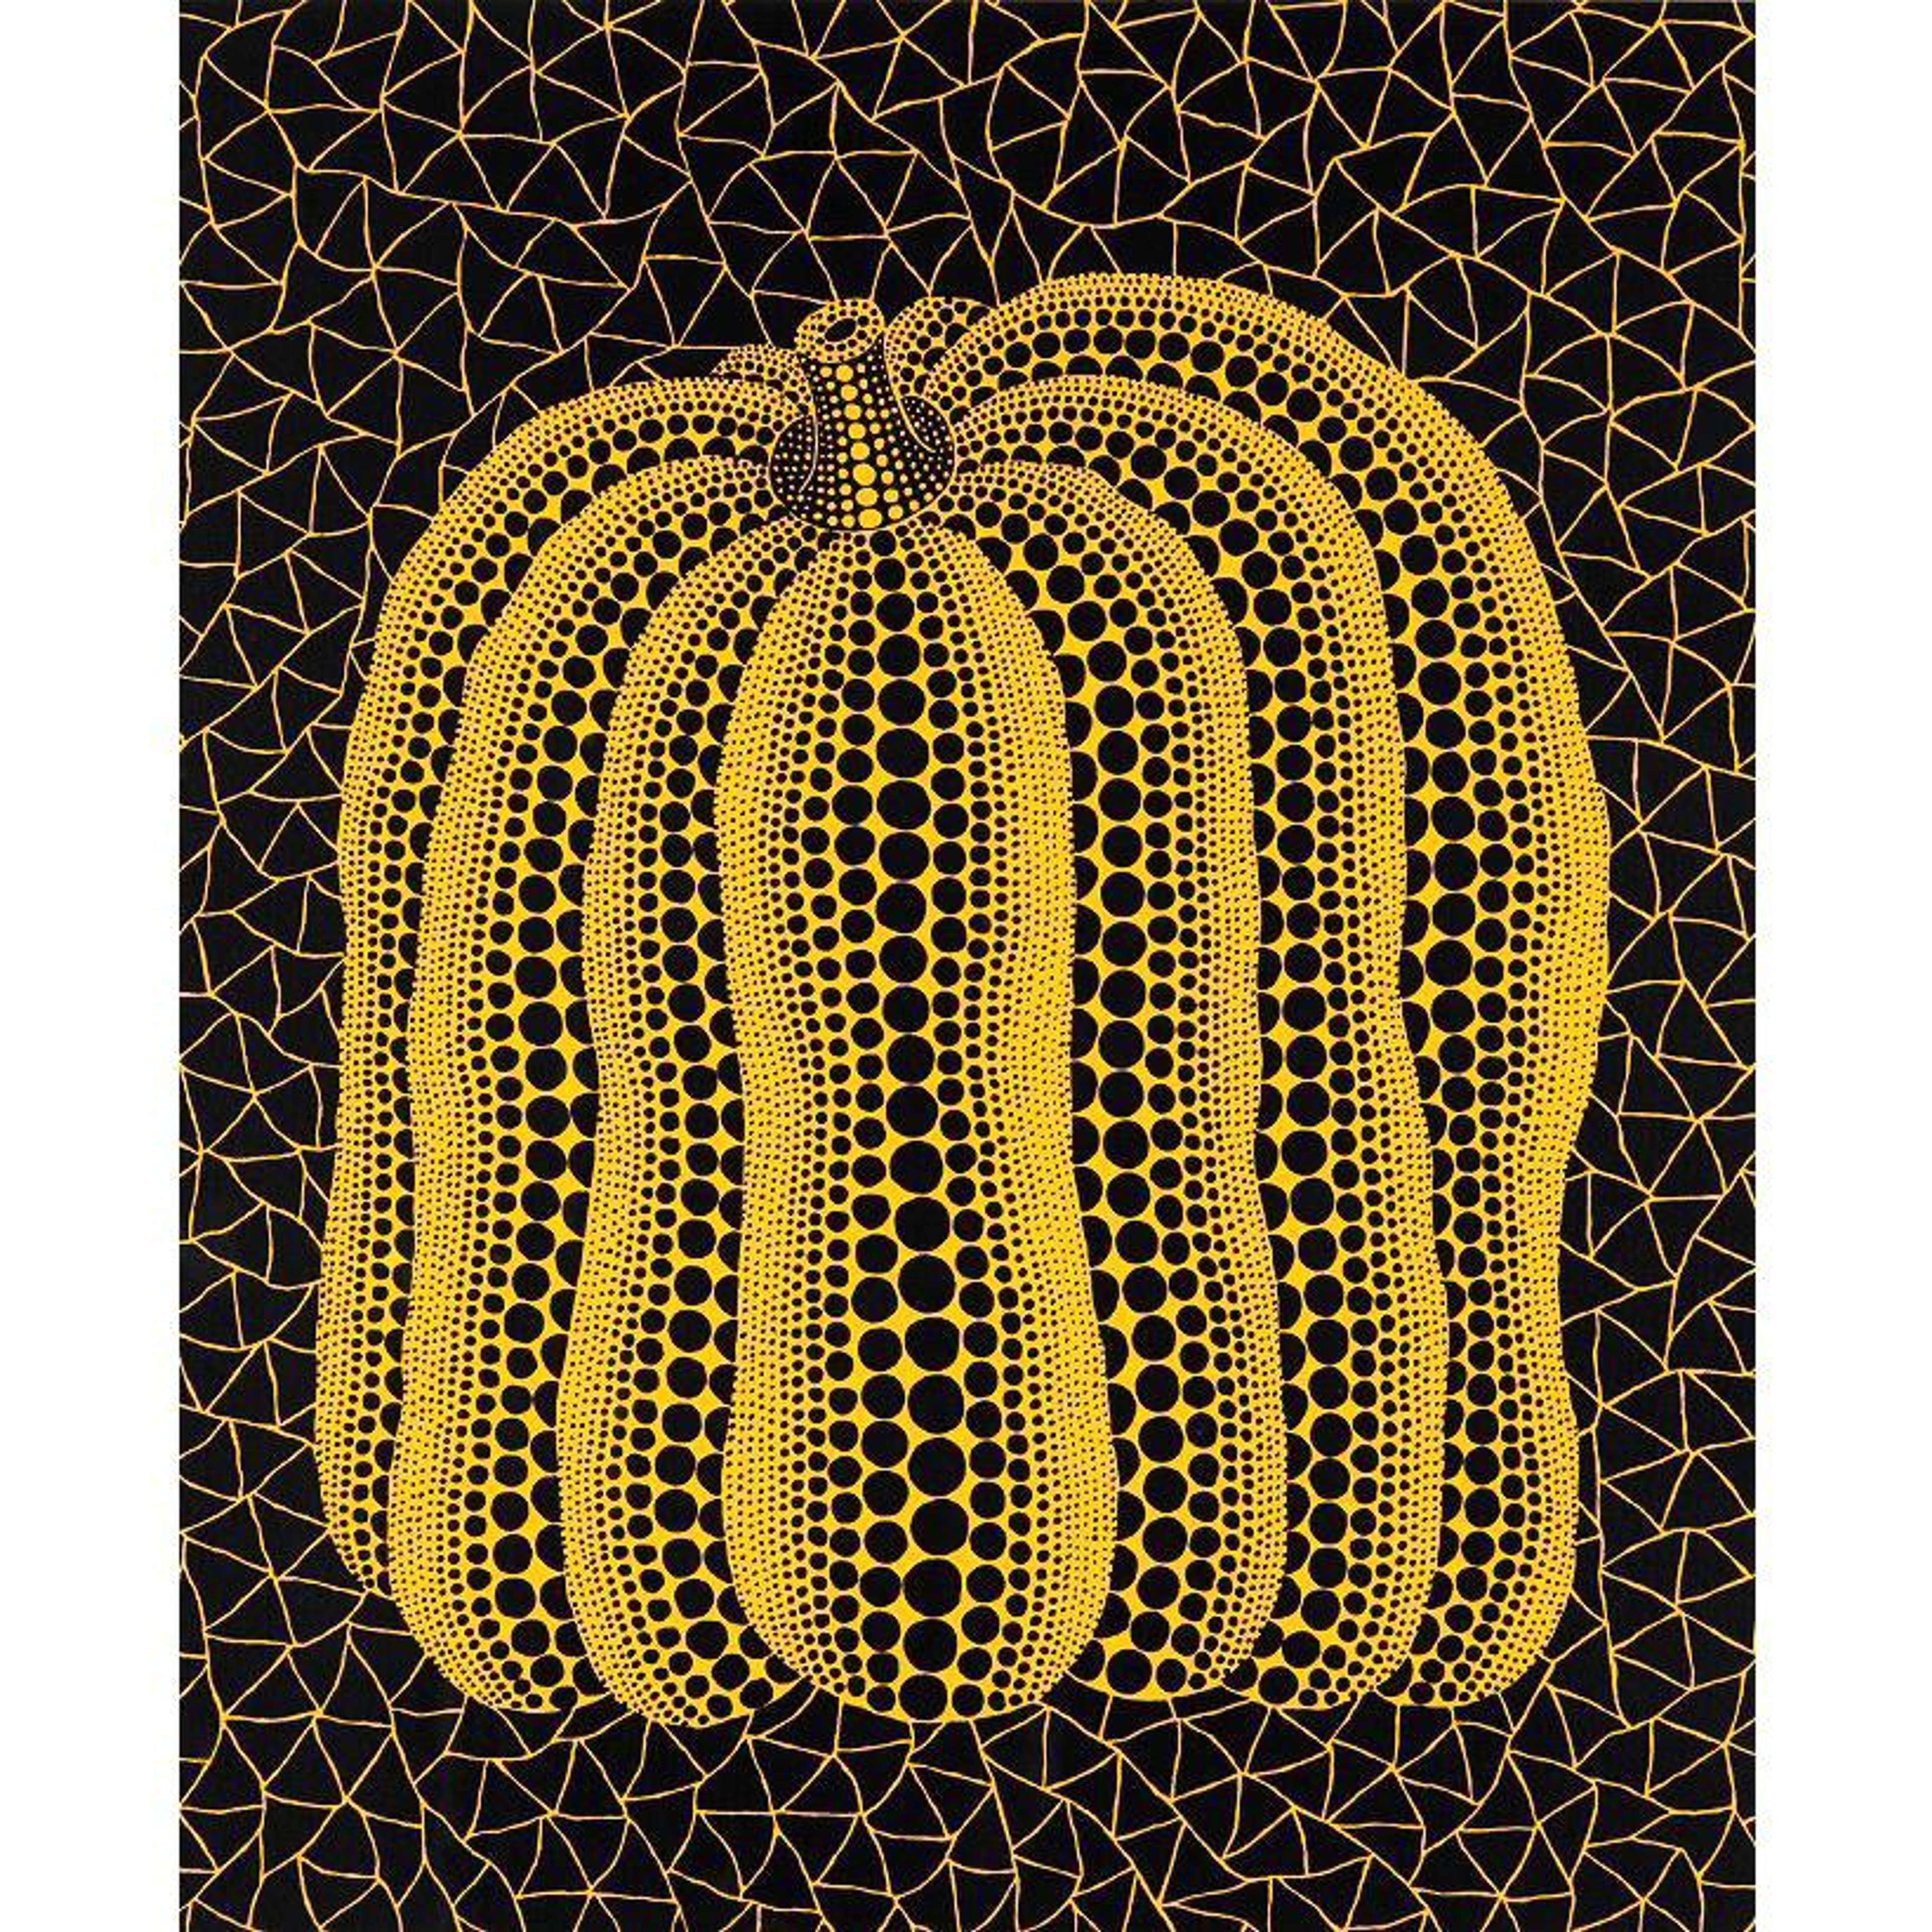 Pumpkin (T) , Kusama 312 - Signed Print by Yayoi Kusama 2003 - MyArtBroker